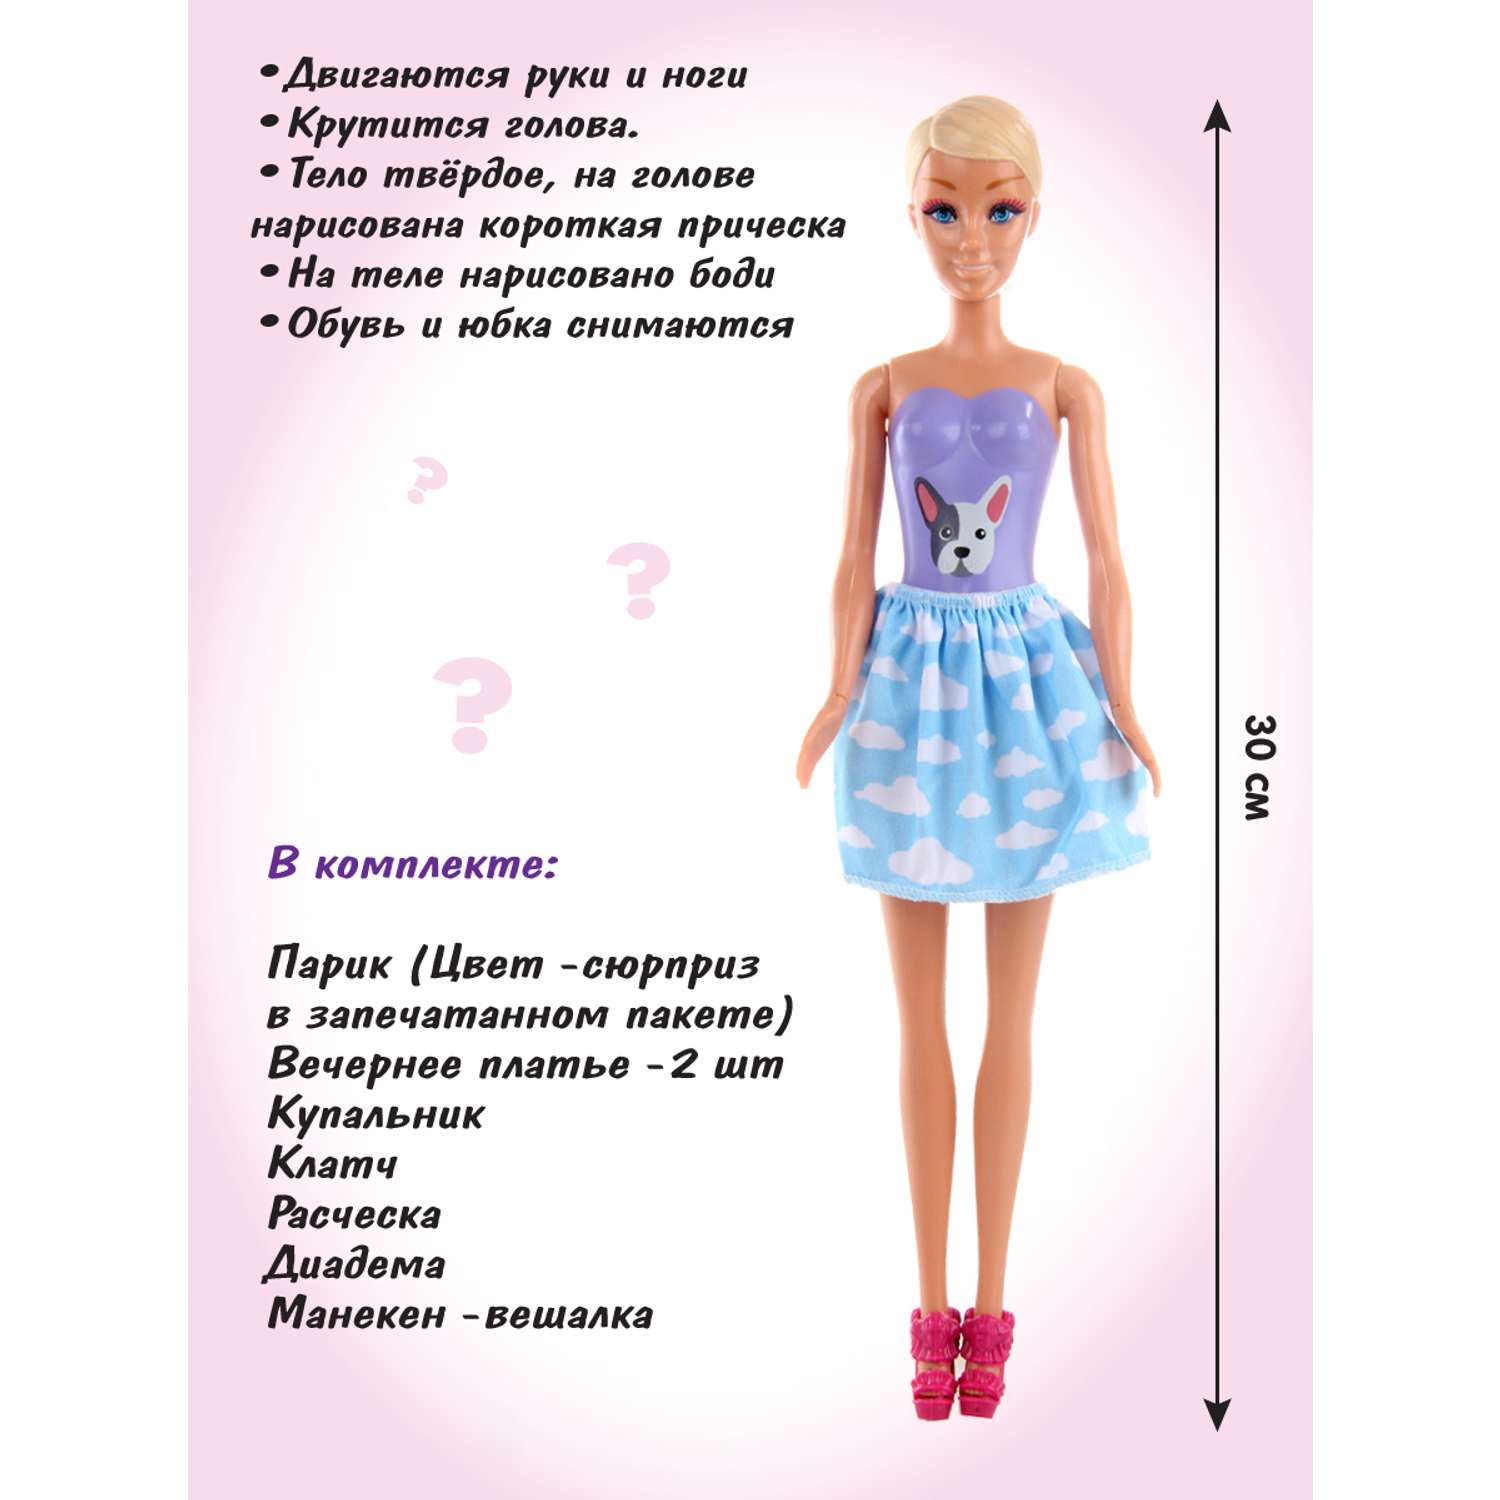 Кукла модель Барби Veld Co с одеждой и париками 126468 - фото 2